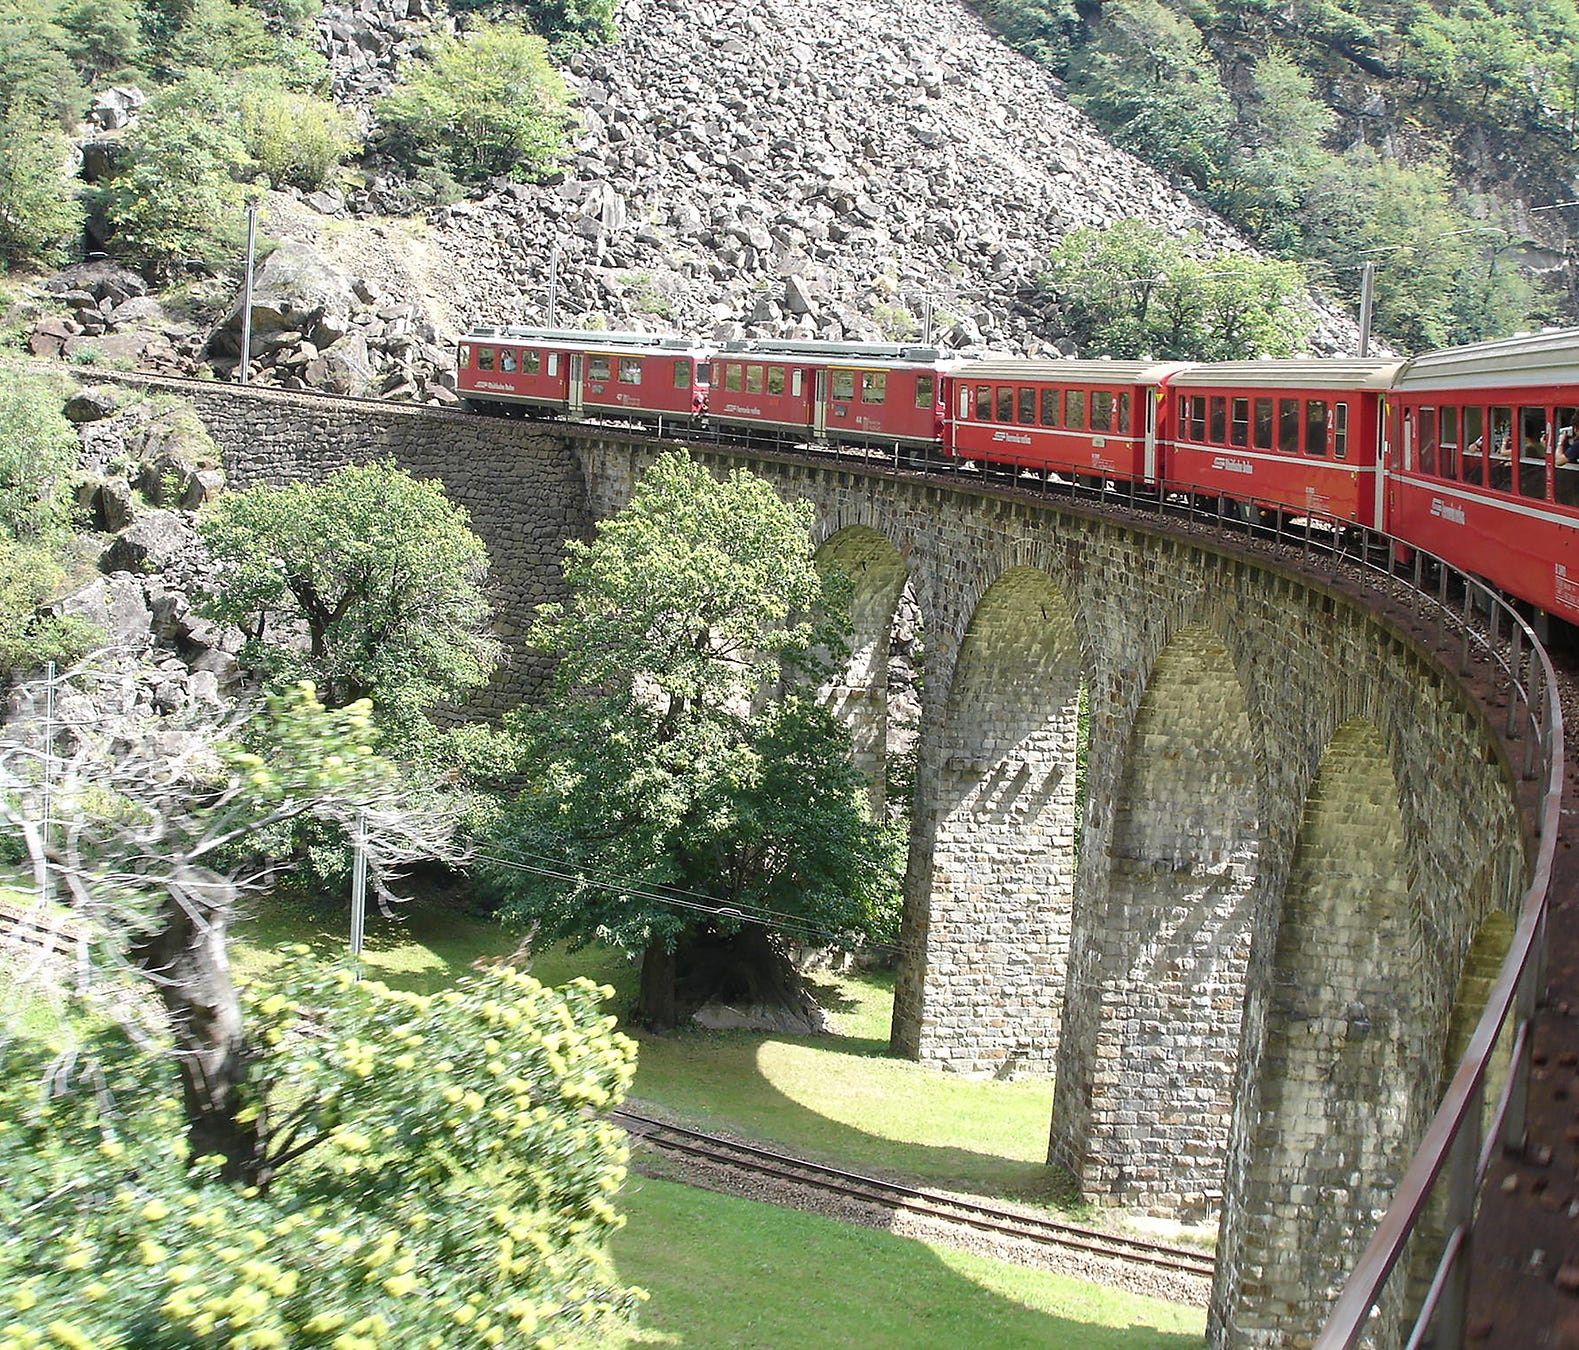 Taking a train like Switzerland's Bernina Express keeps you close to Europe's charms.